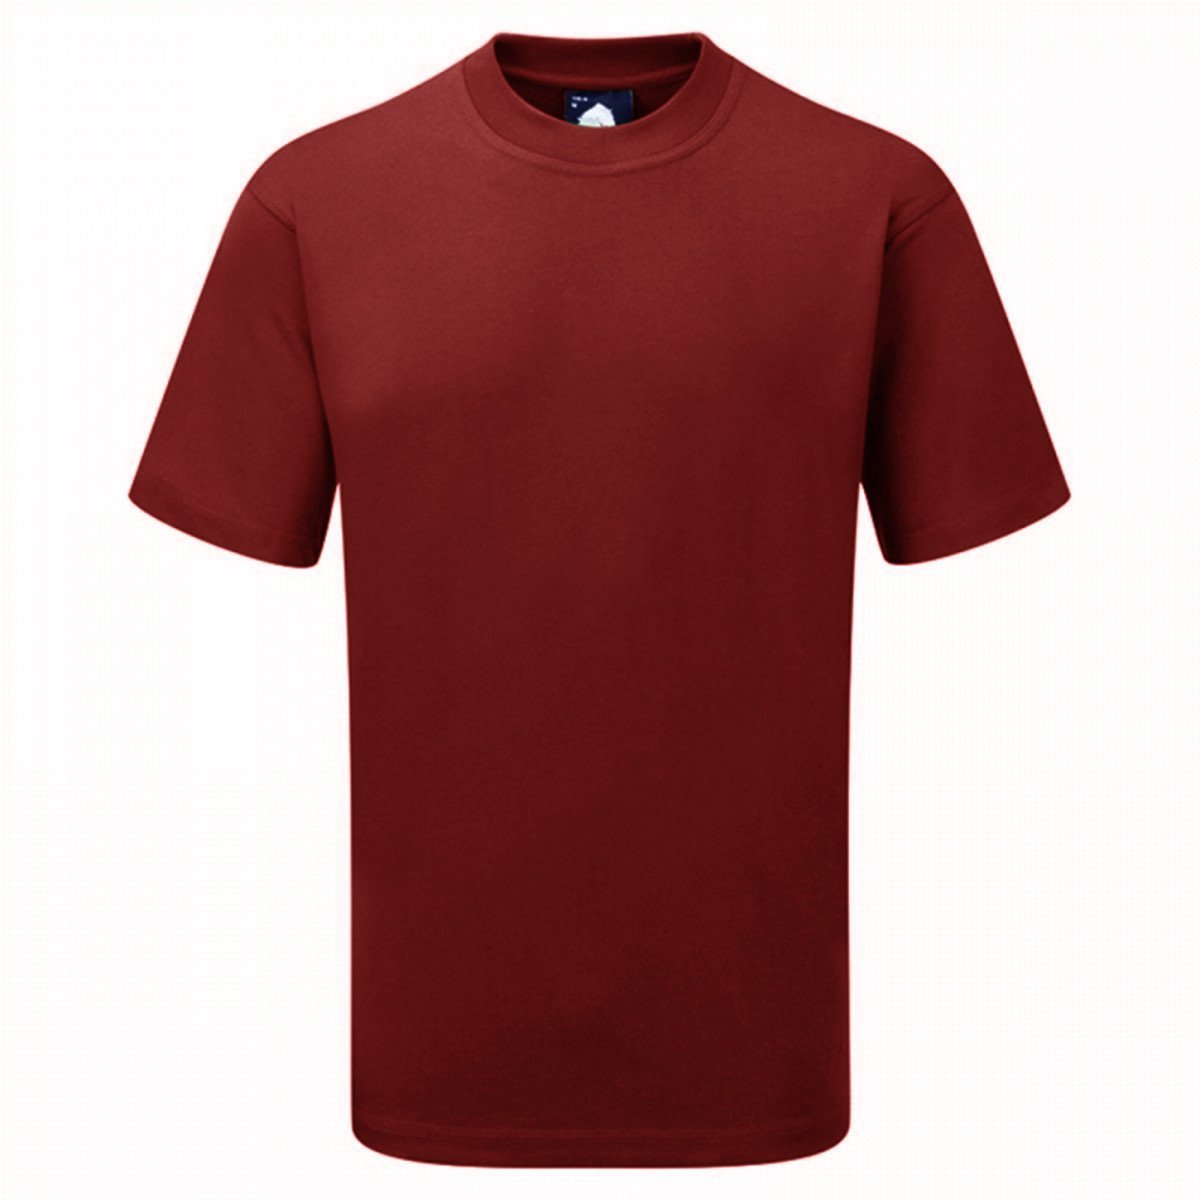 Jackson Short Sleeve B Quality Tee Shirt B Quality Image Burgundy XL 